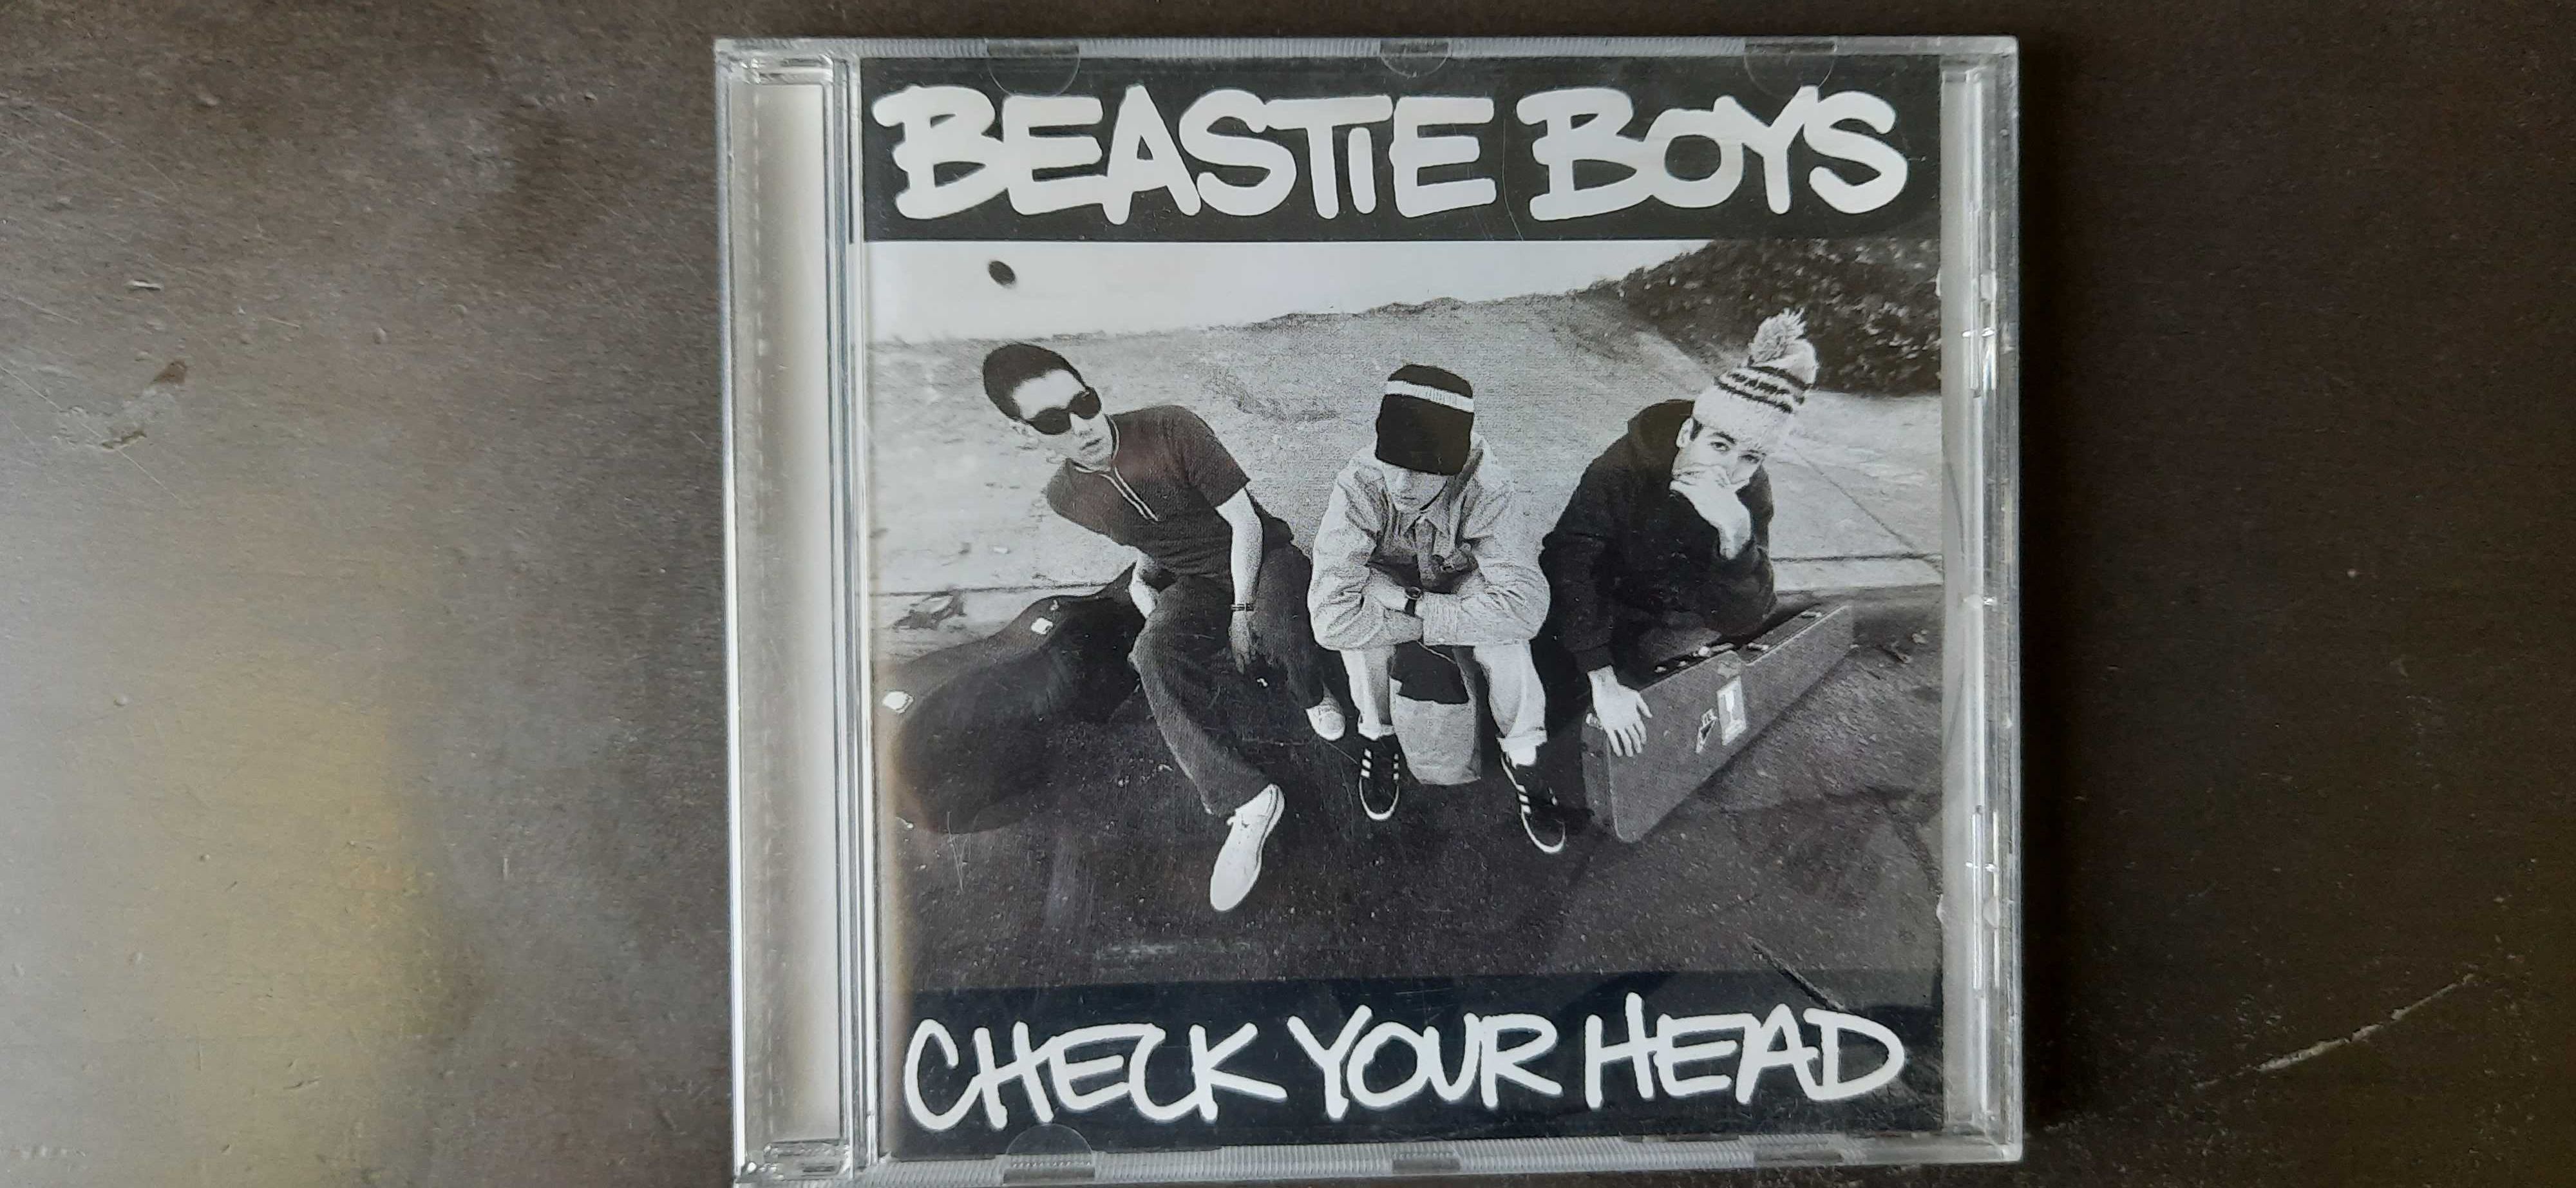 Beastie Boys - Check Your Head
CD